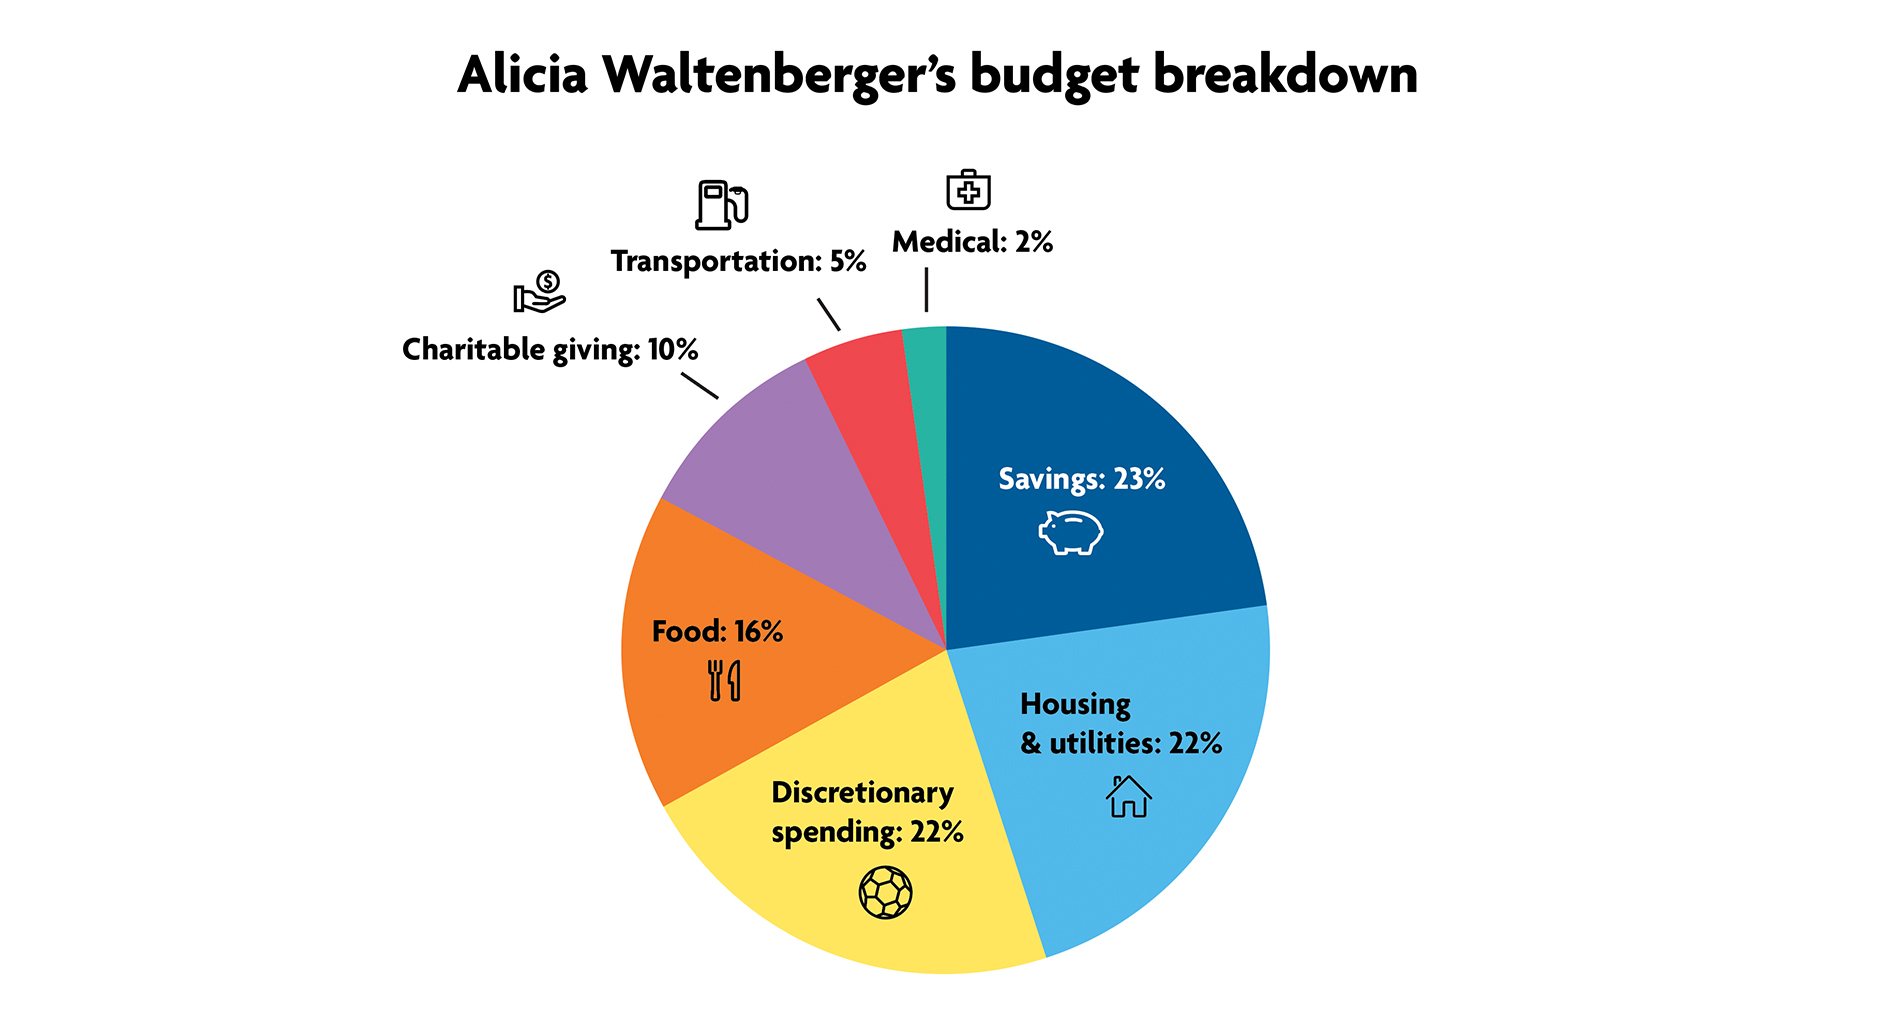 Alicia Waltenberger's budget breakdown piechart: Savings 23%, Housing 22%, Discretionary 22%, Food 16%, Charitable giving 10%, Transportation 5%, Medical 2%